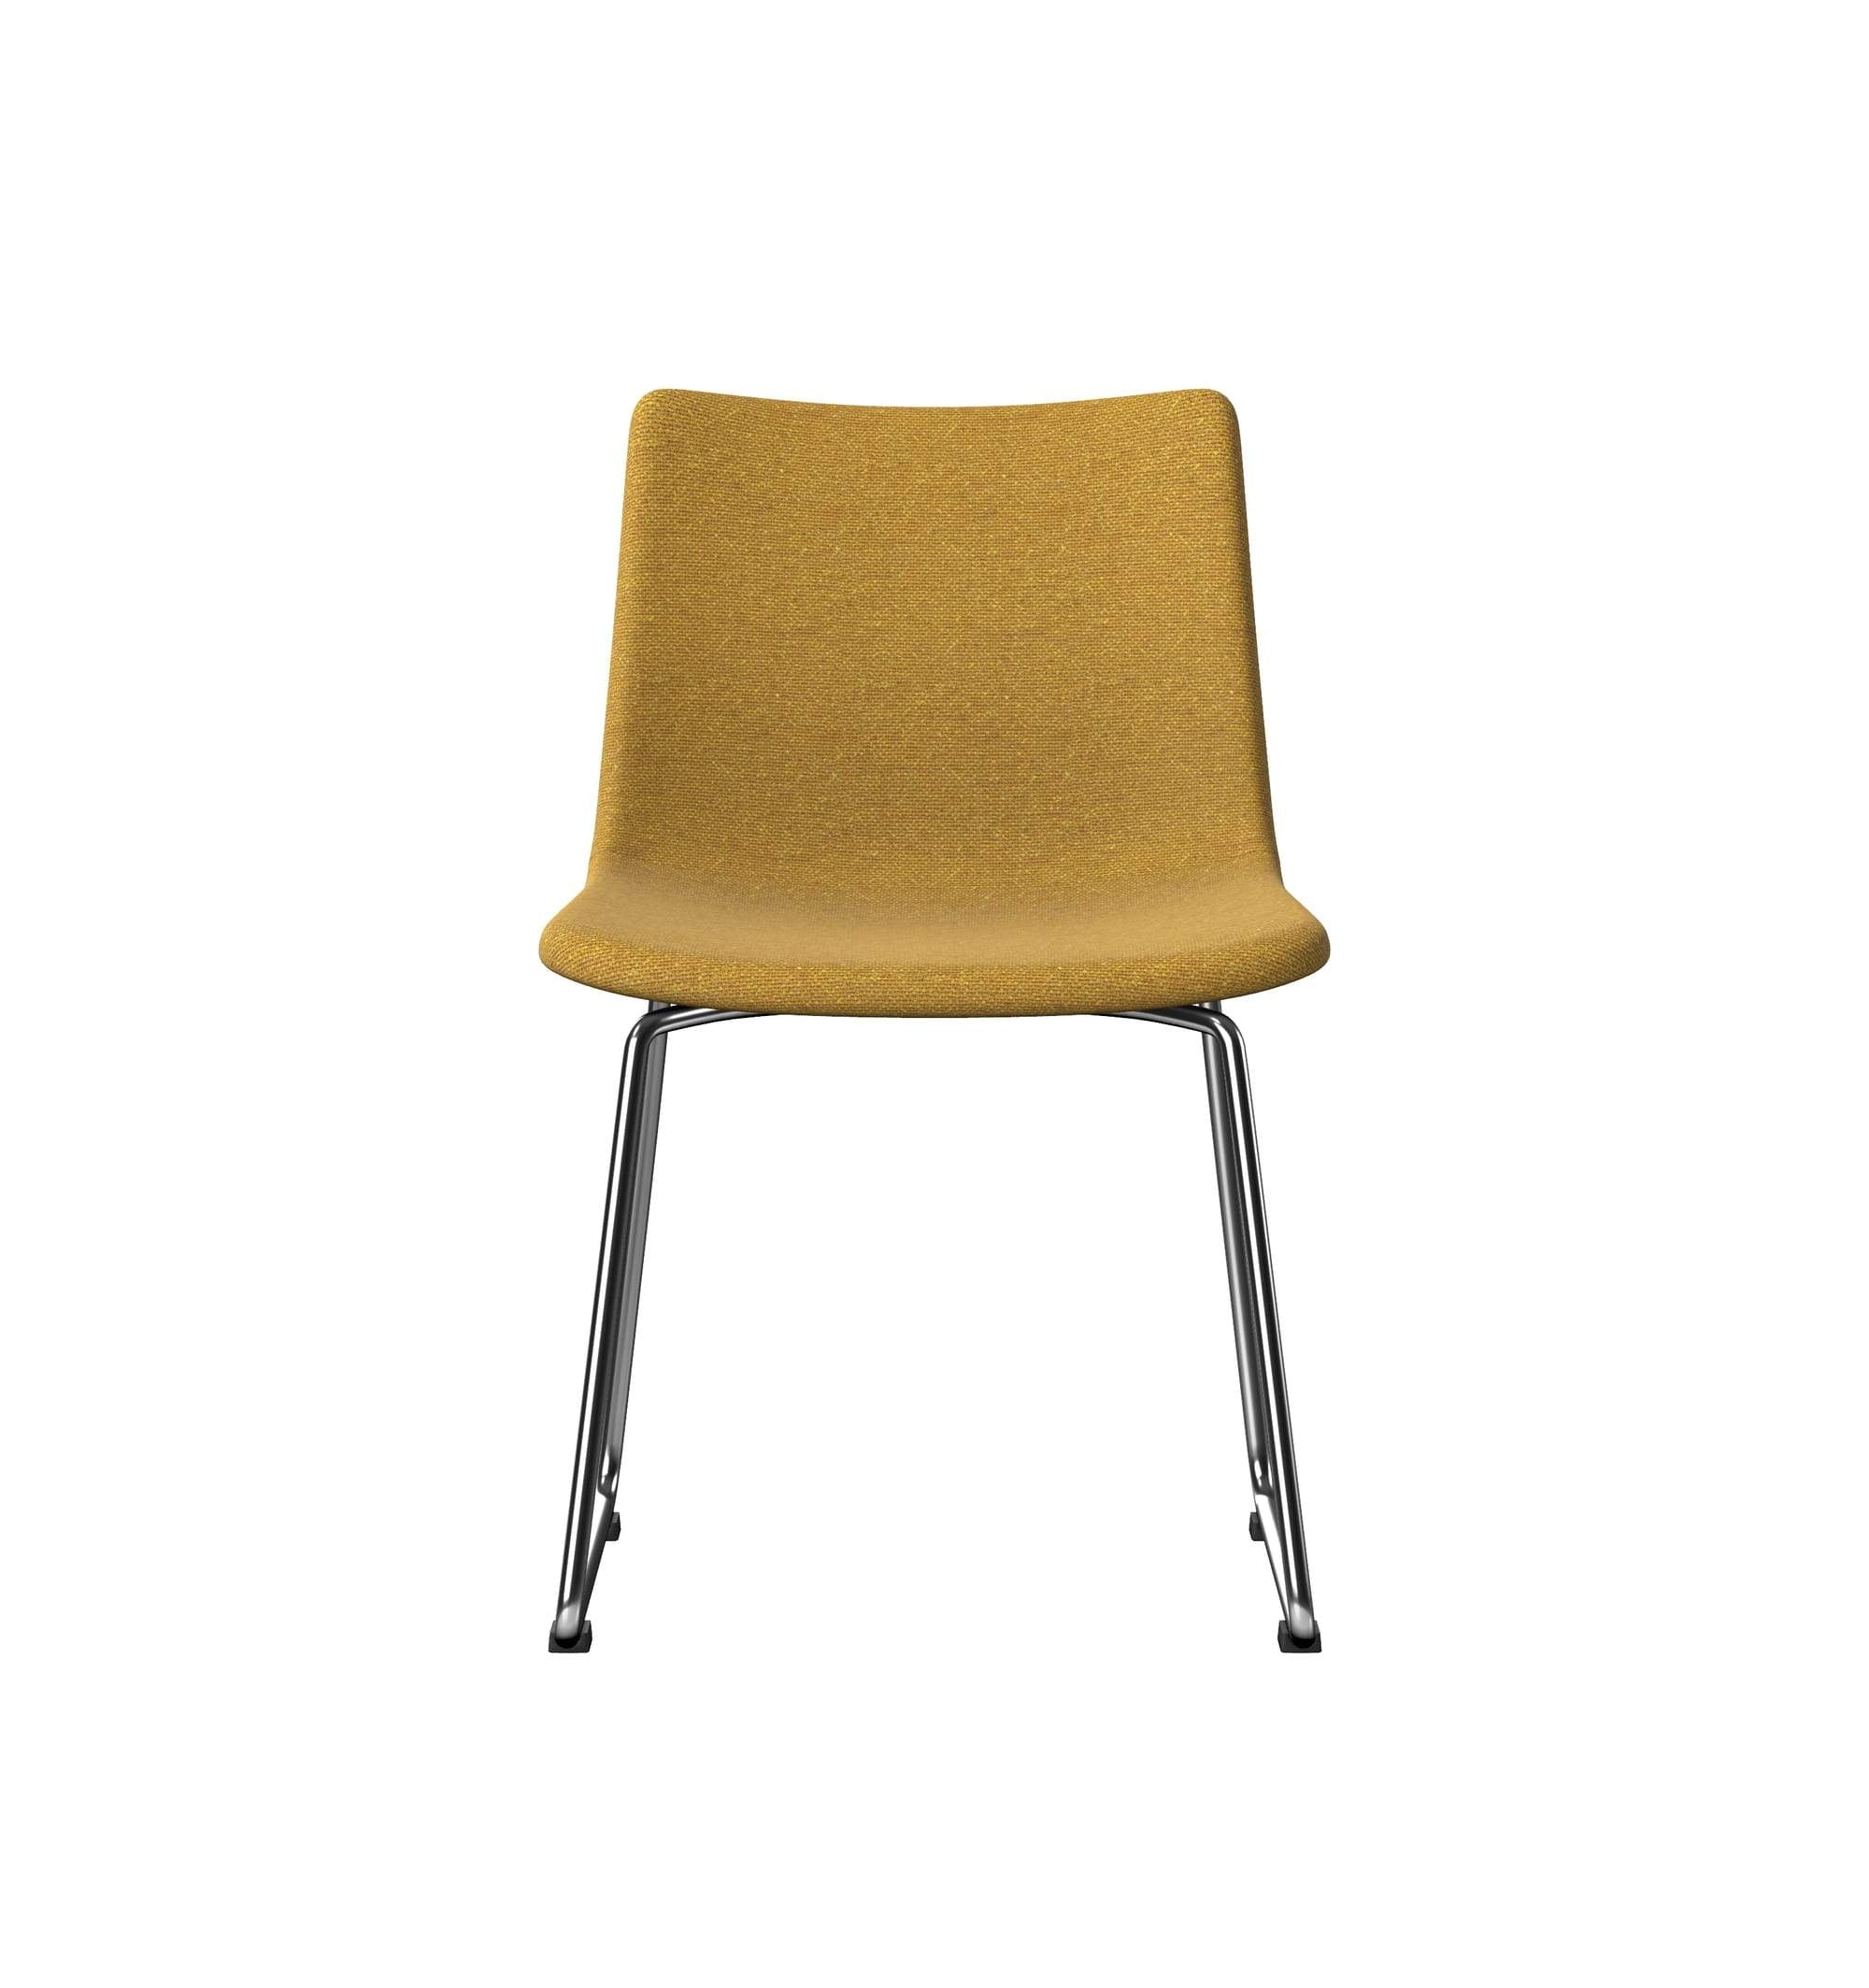 PRIME - Large Upholstered Chair, Skid Metal Base